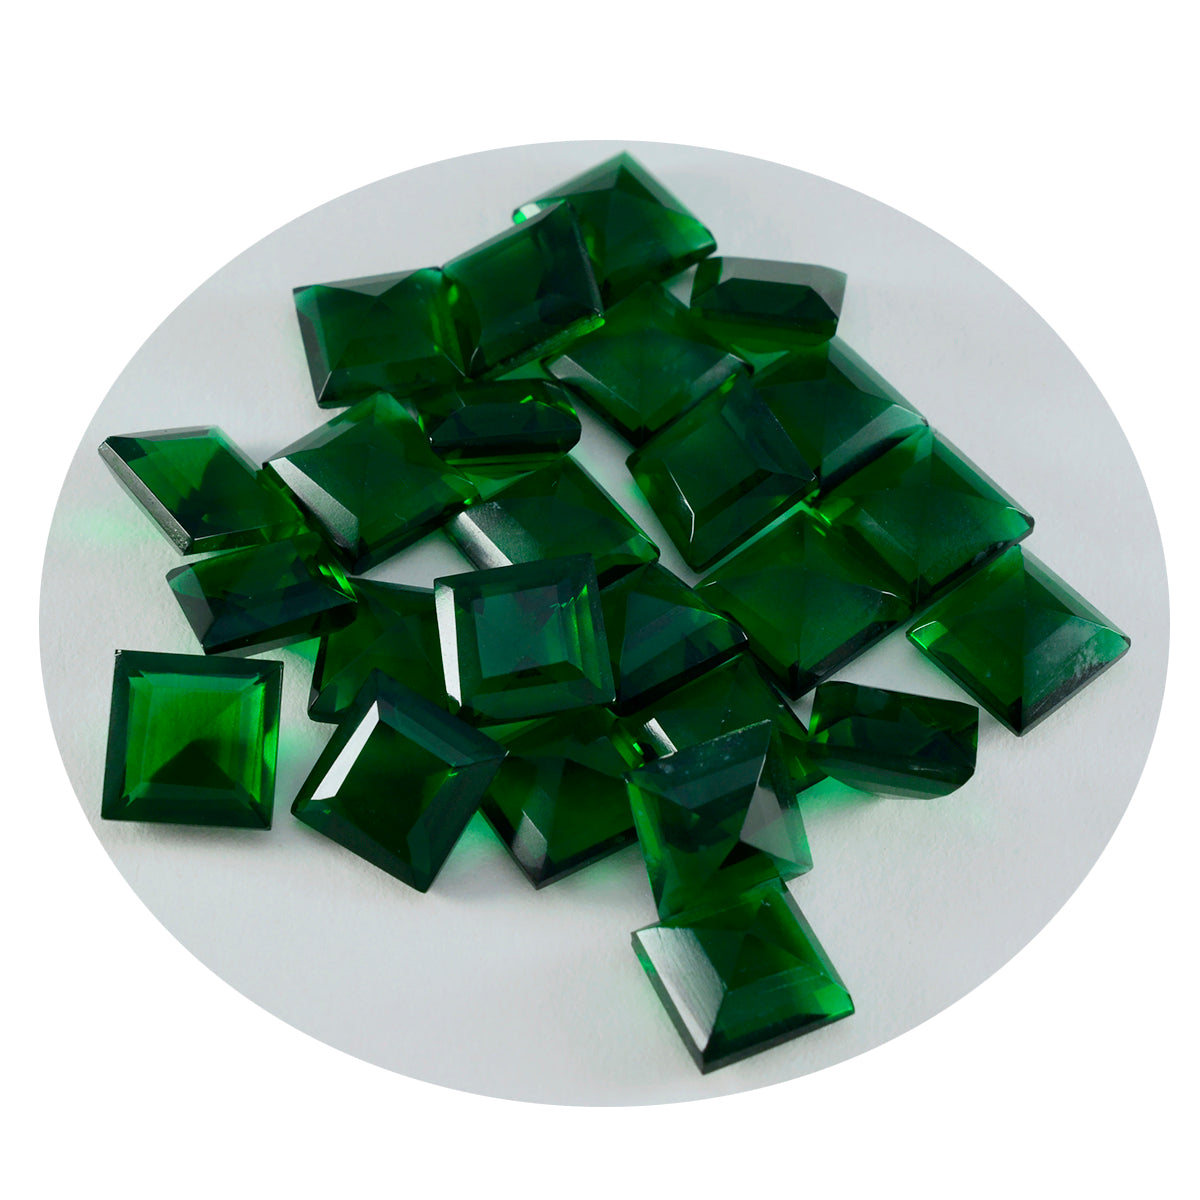 Riyogems 1PC Green Emerald CZ Faceted 9x9 mm Square Shape astonishing Quality Stone